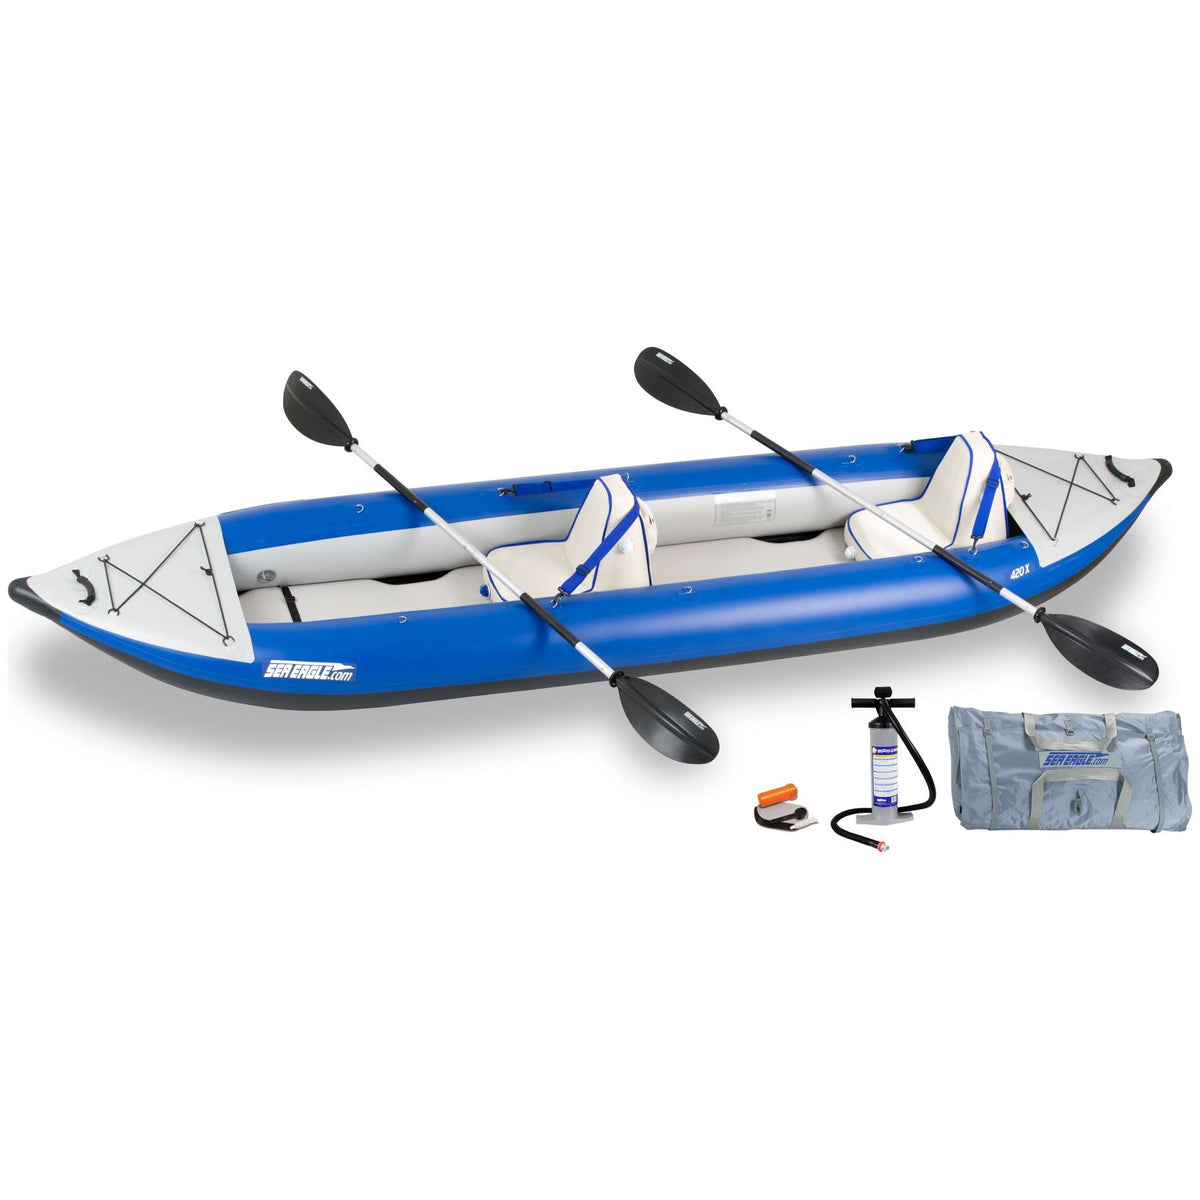 Sea Eagle 420x Explorer Kayak Deluxe Package